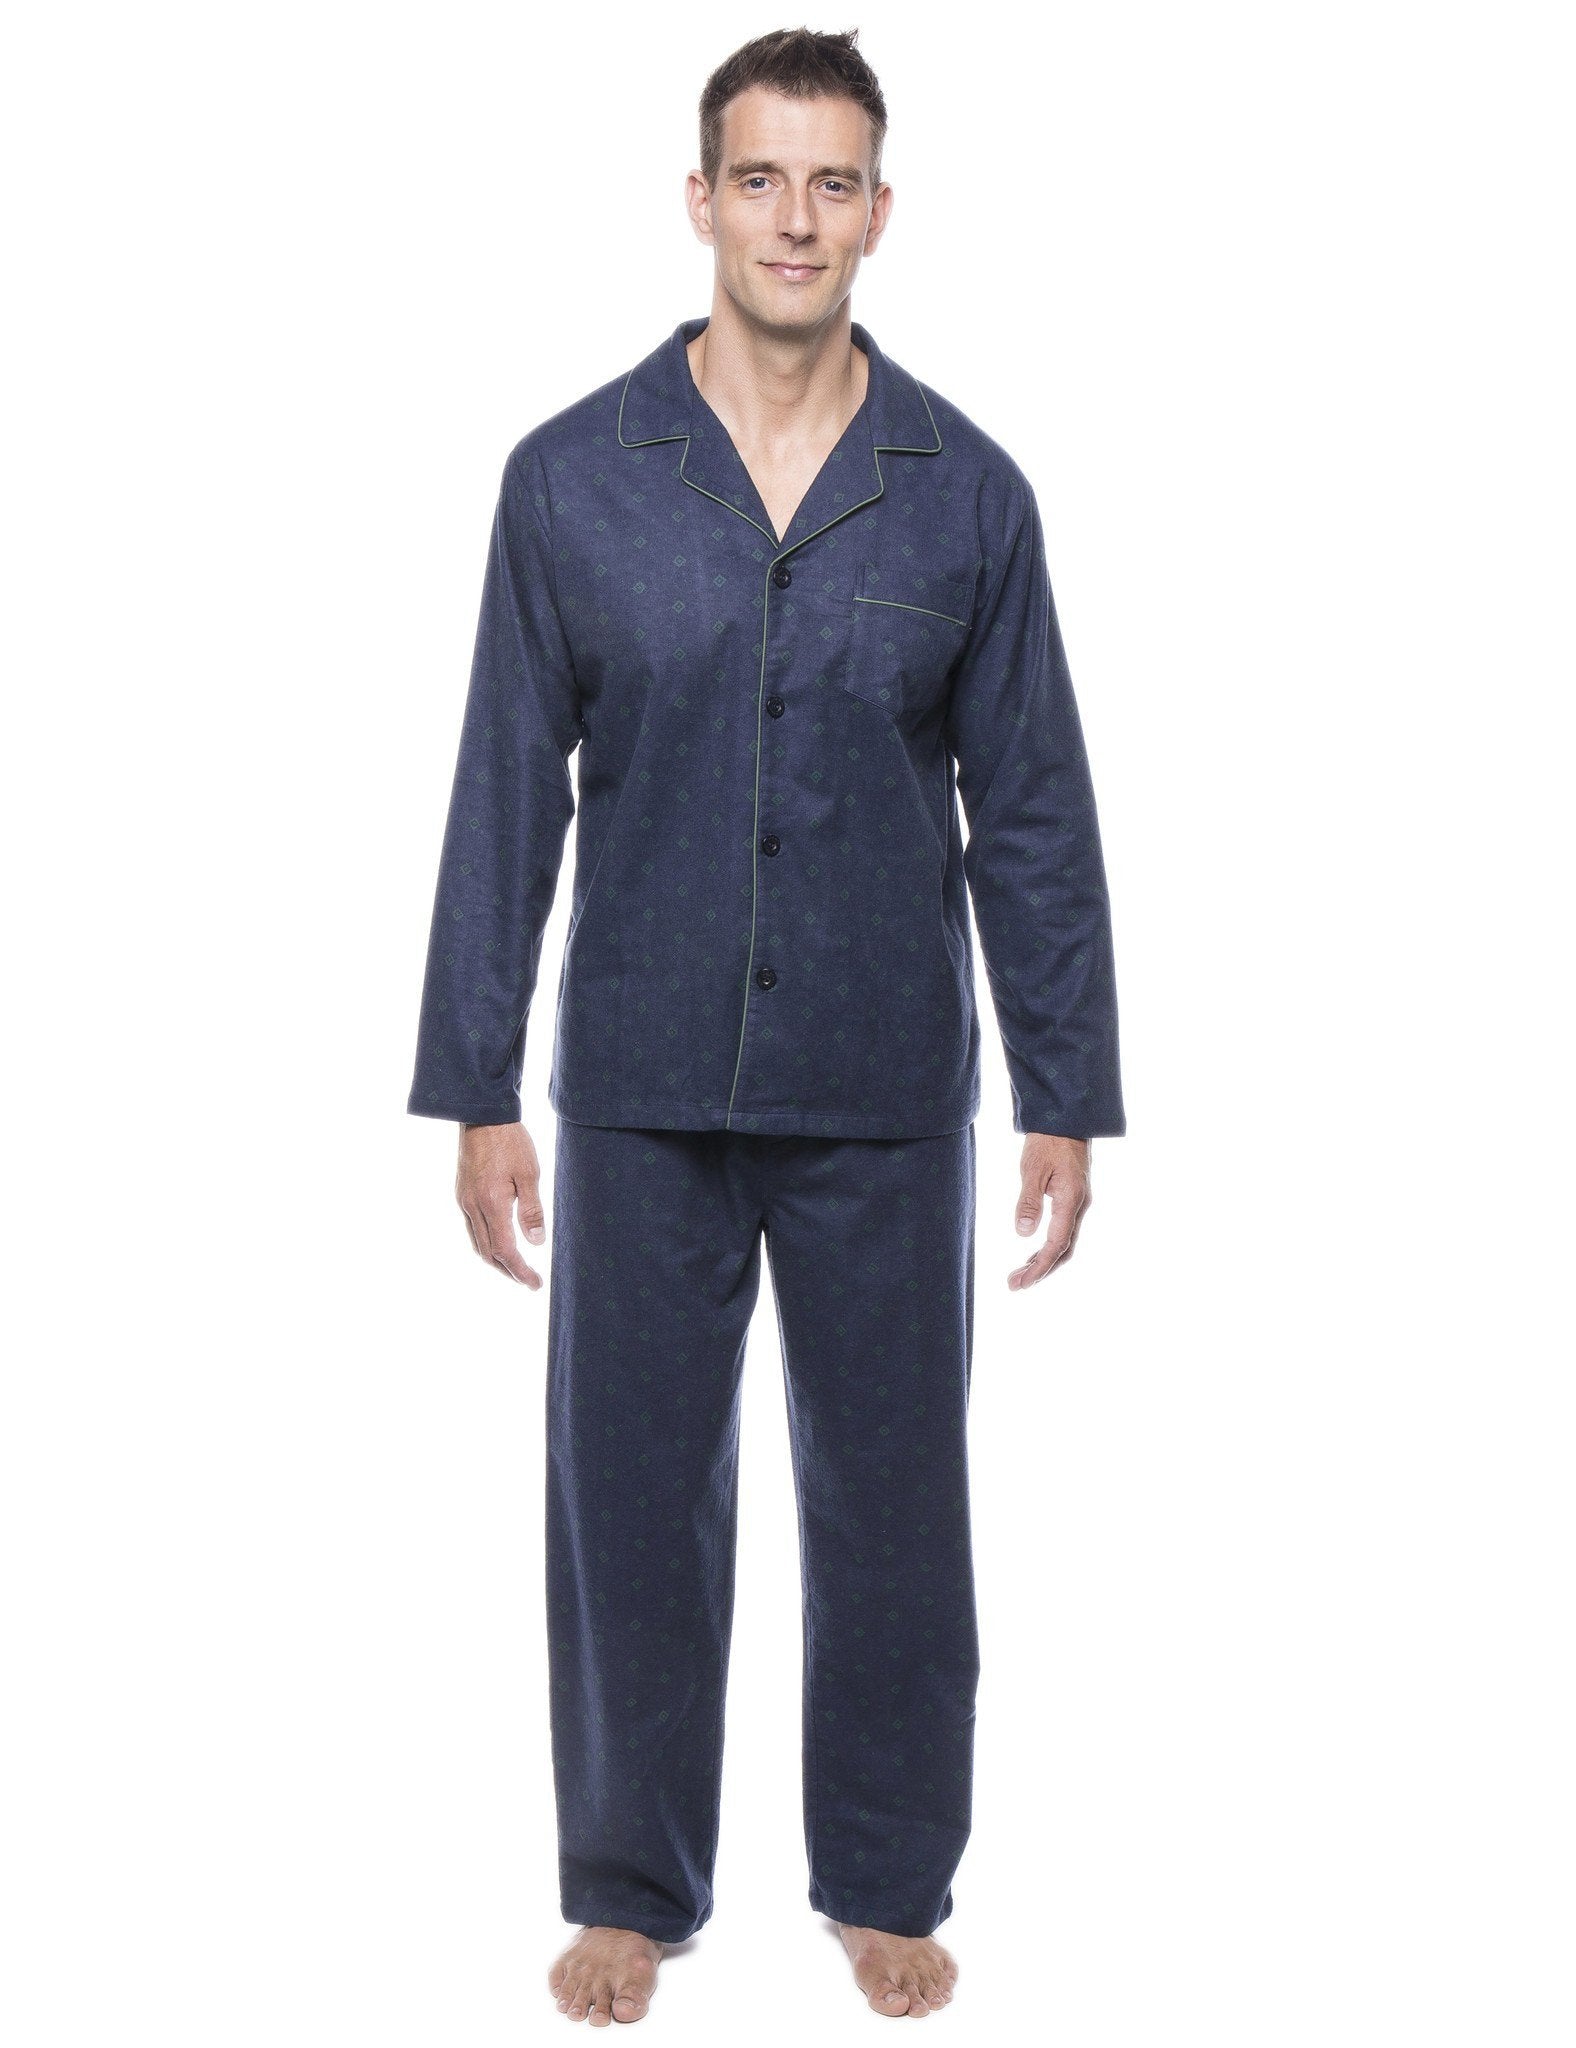 Men's 100% Cotton Flannel Pajama Set - Double Diamond Navy/Green